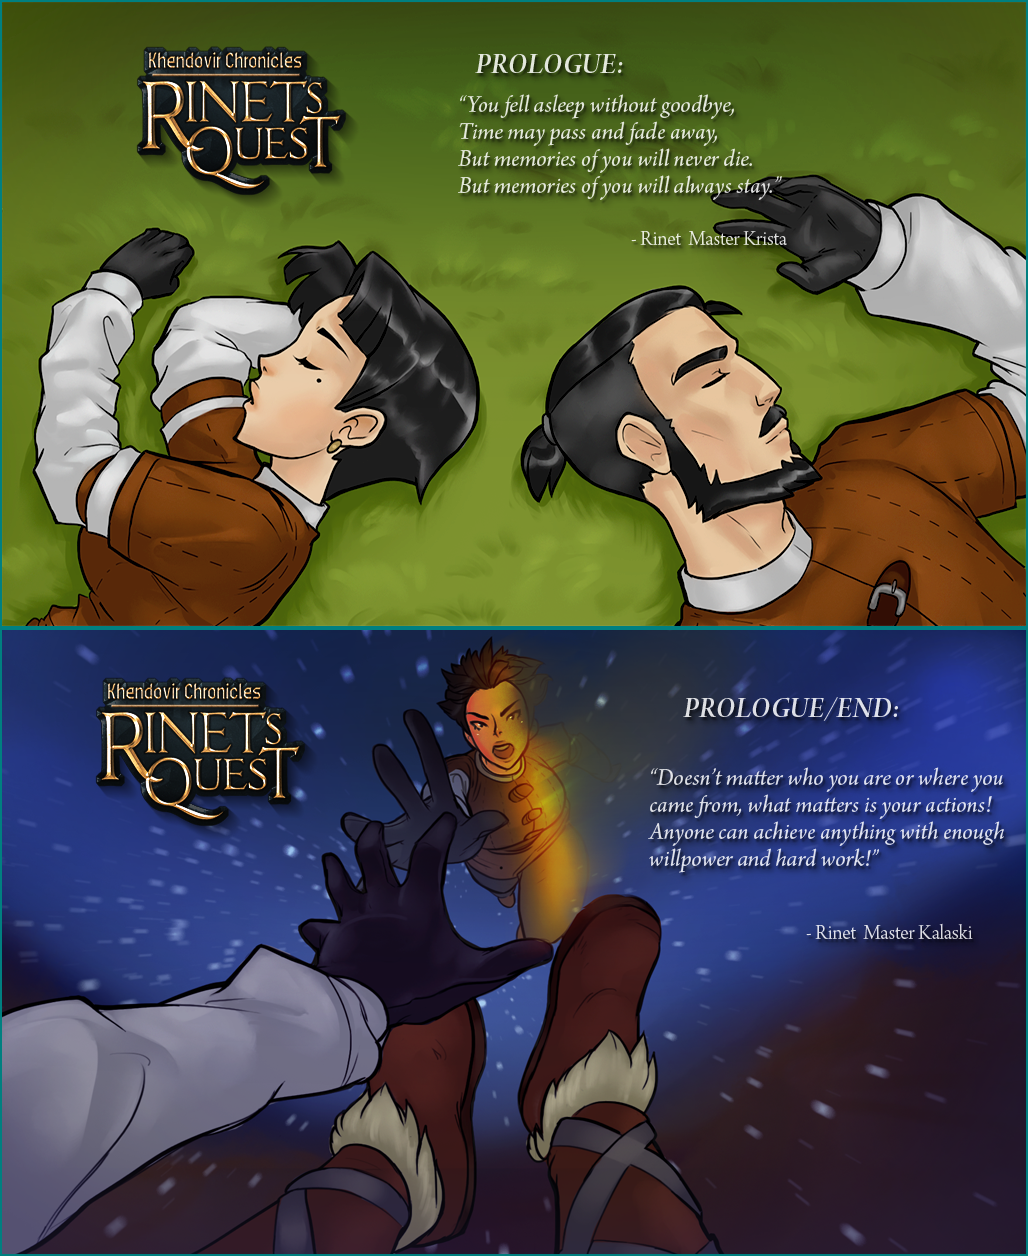 Khendovir Chronicles: Rinets Quest - Prologue Screens